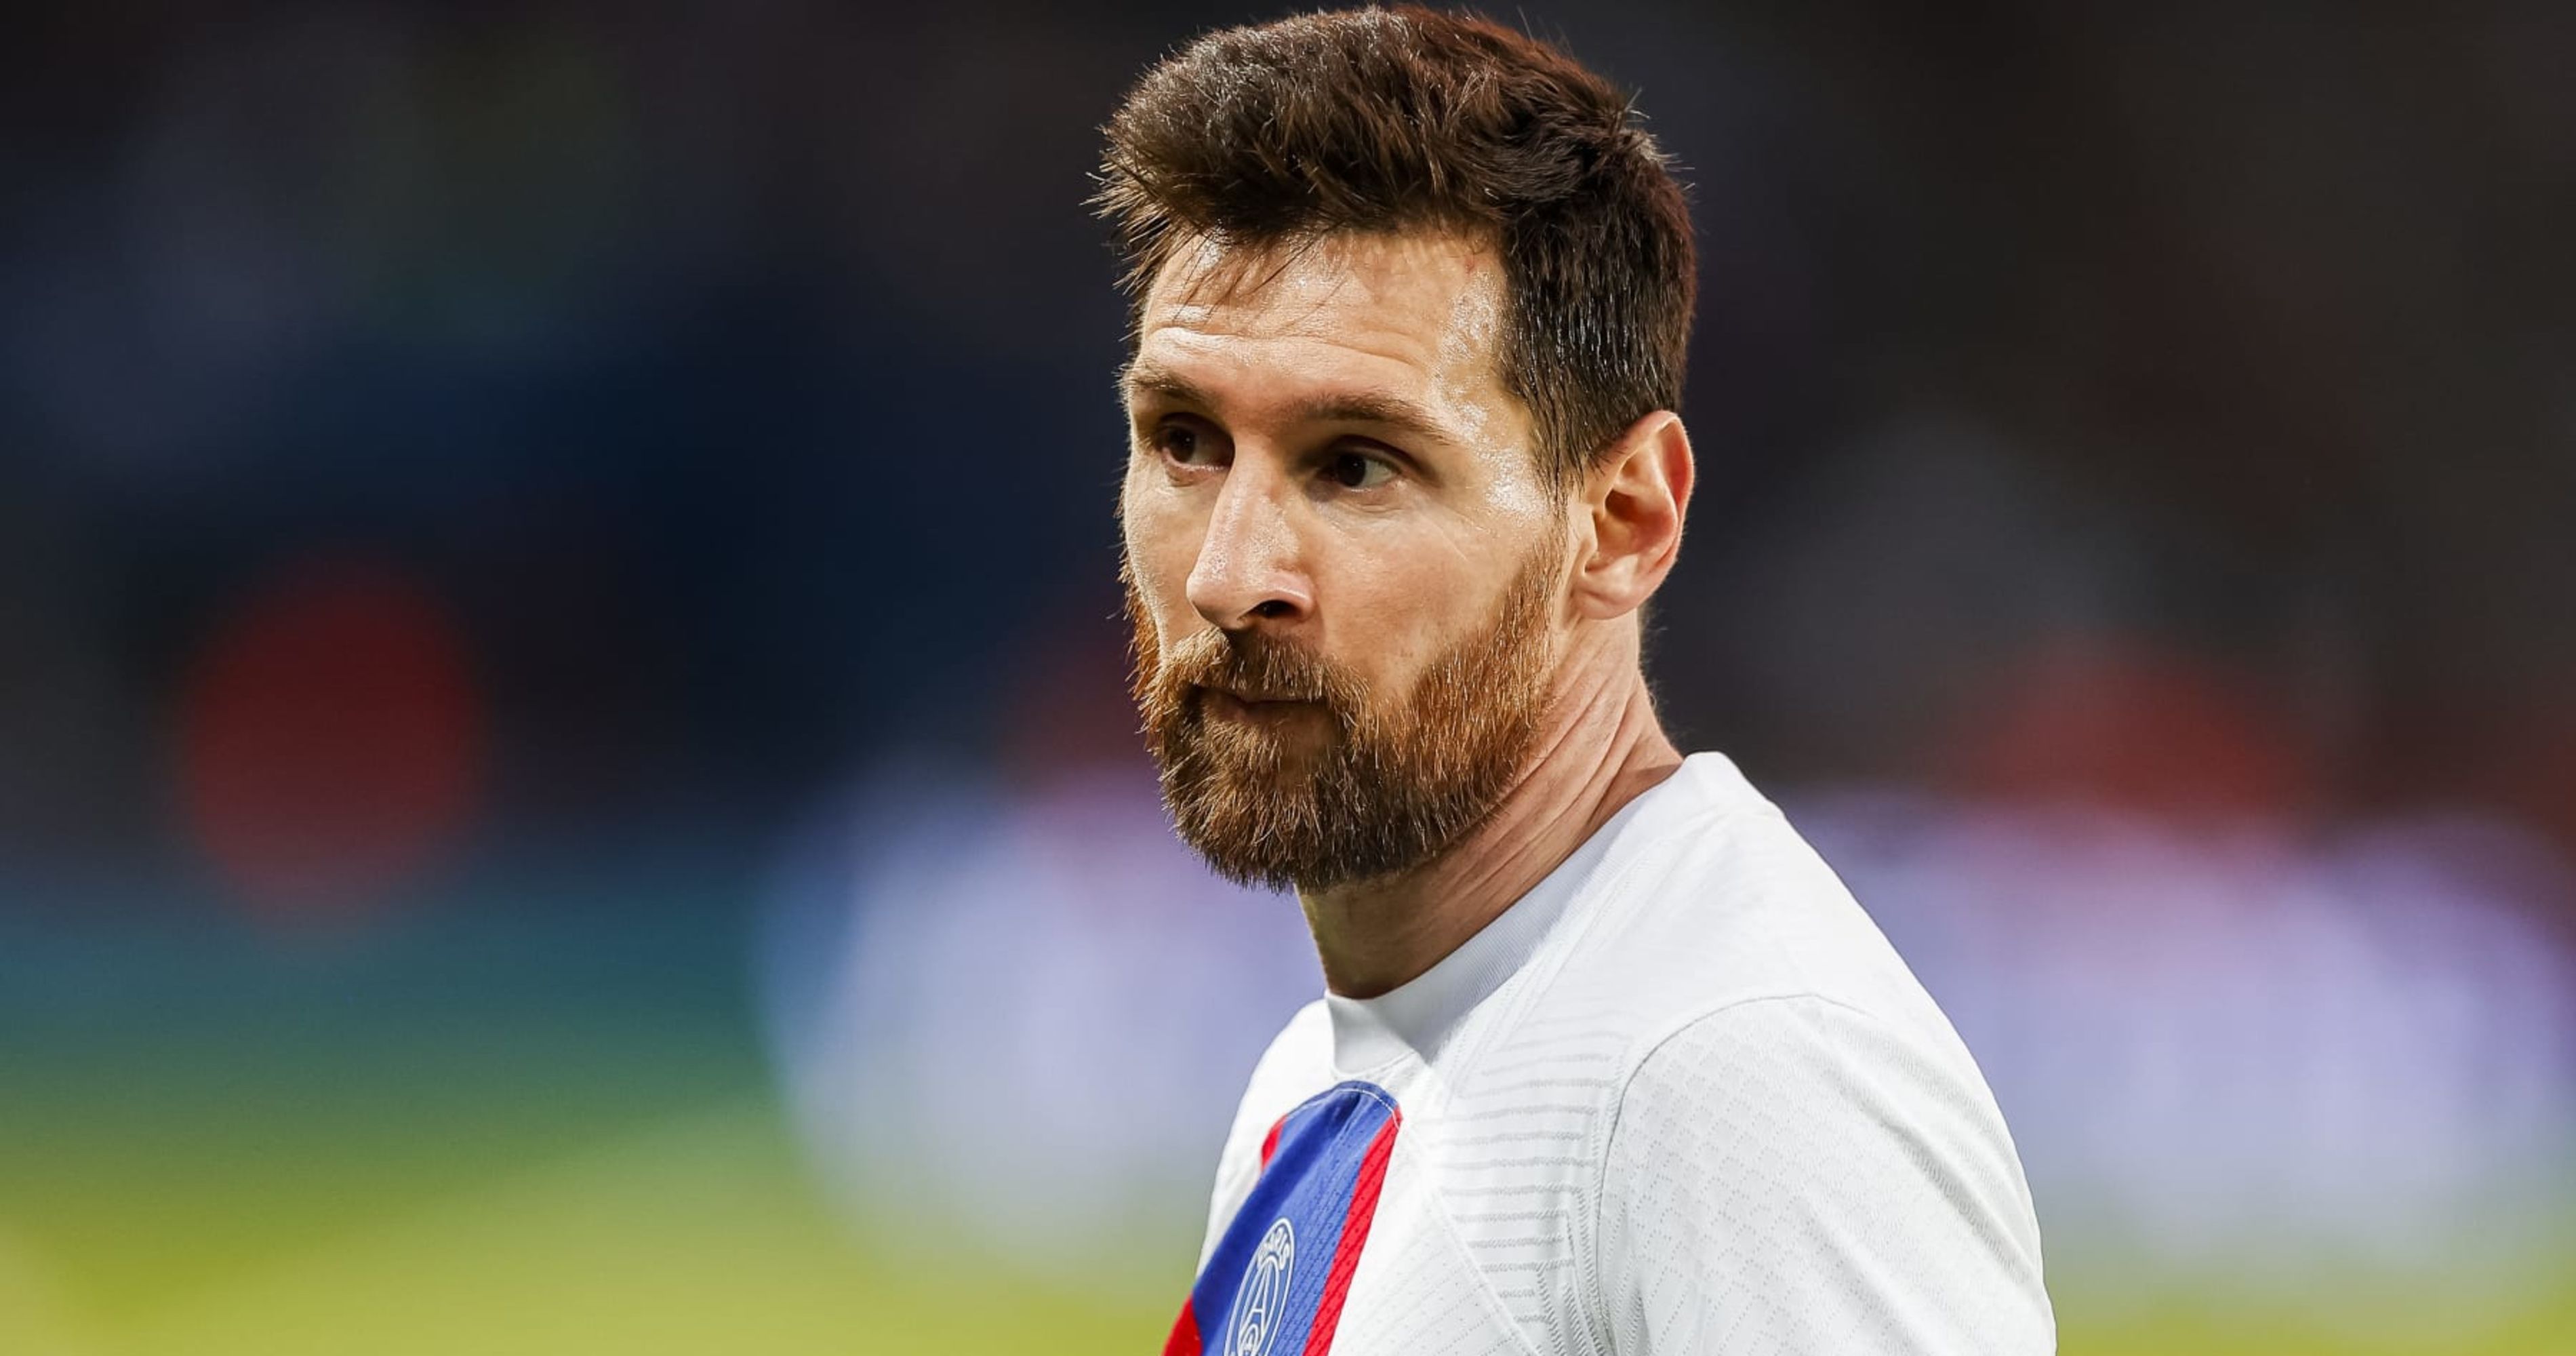 Messi calls 2022 World Cup in Qatar his last chance to make his big dream come true